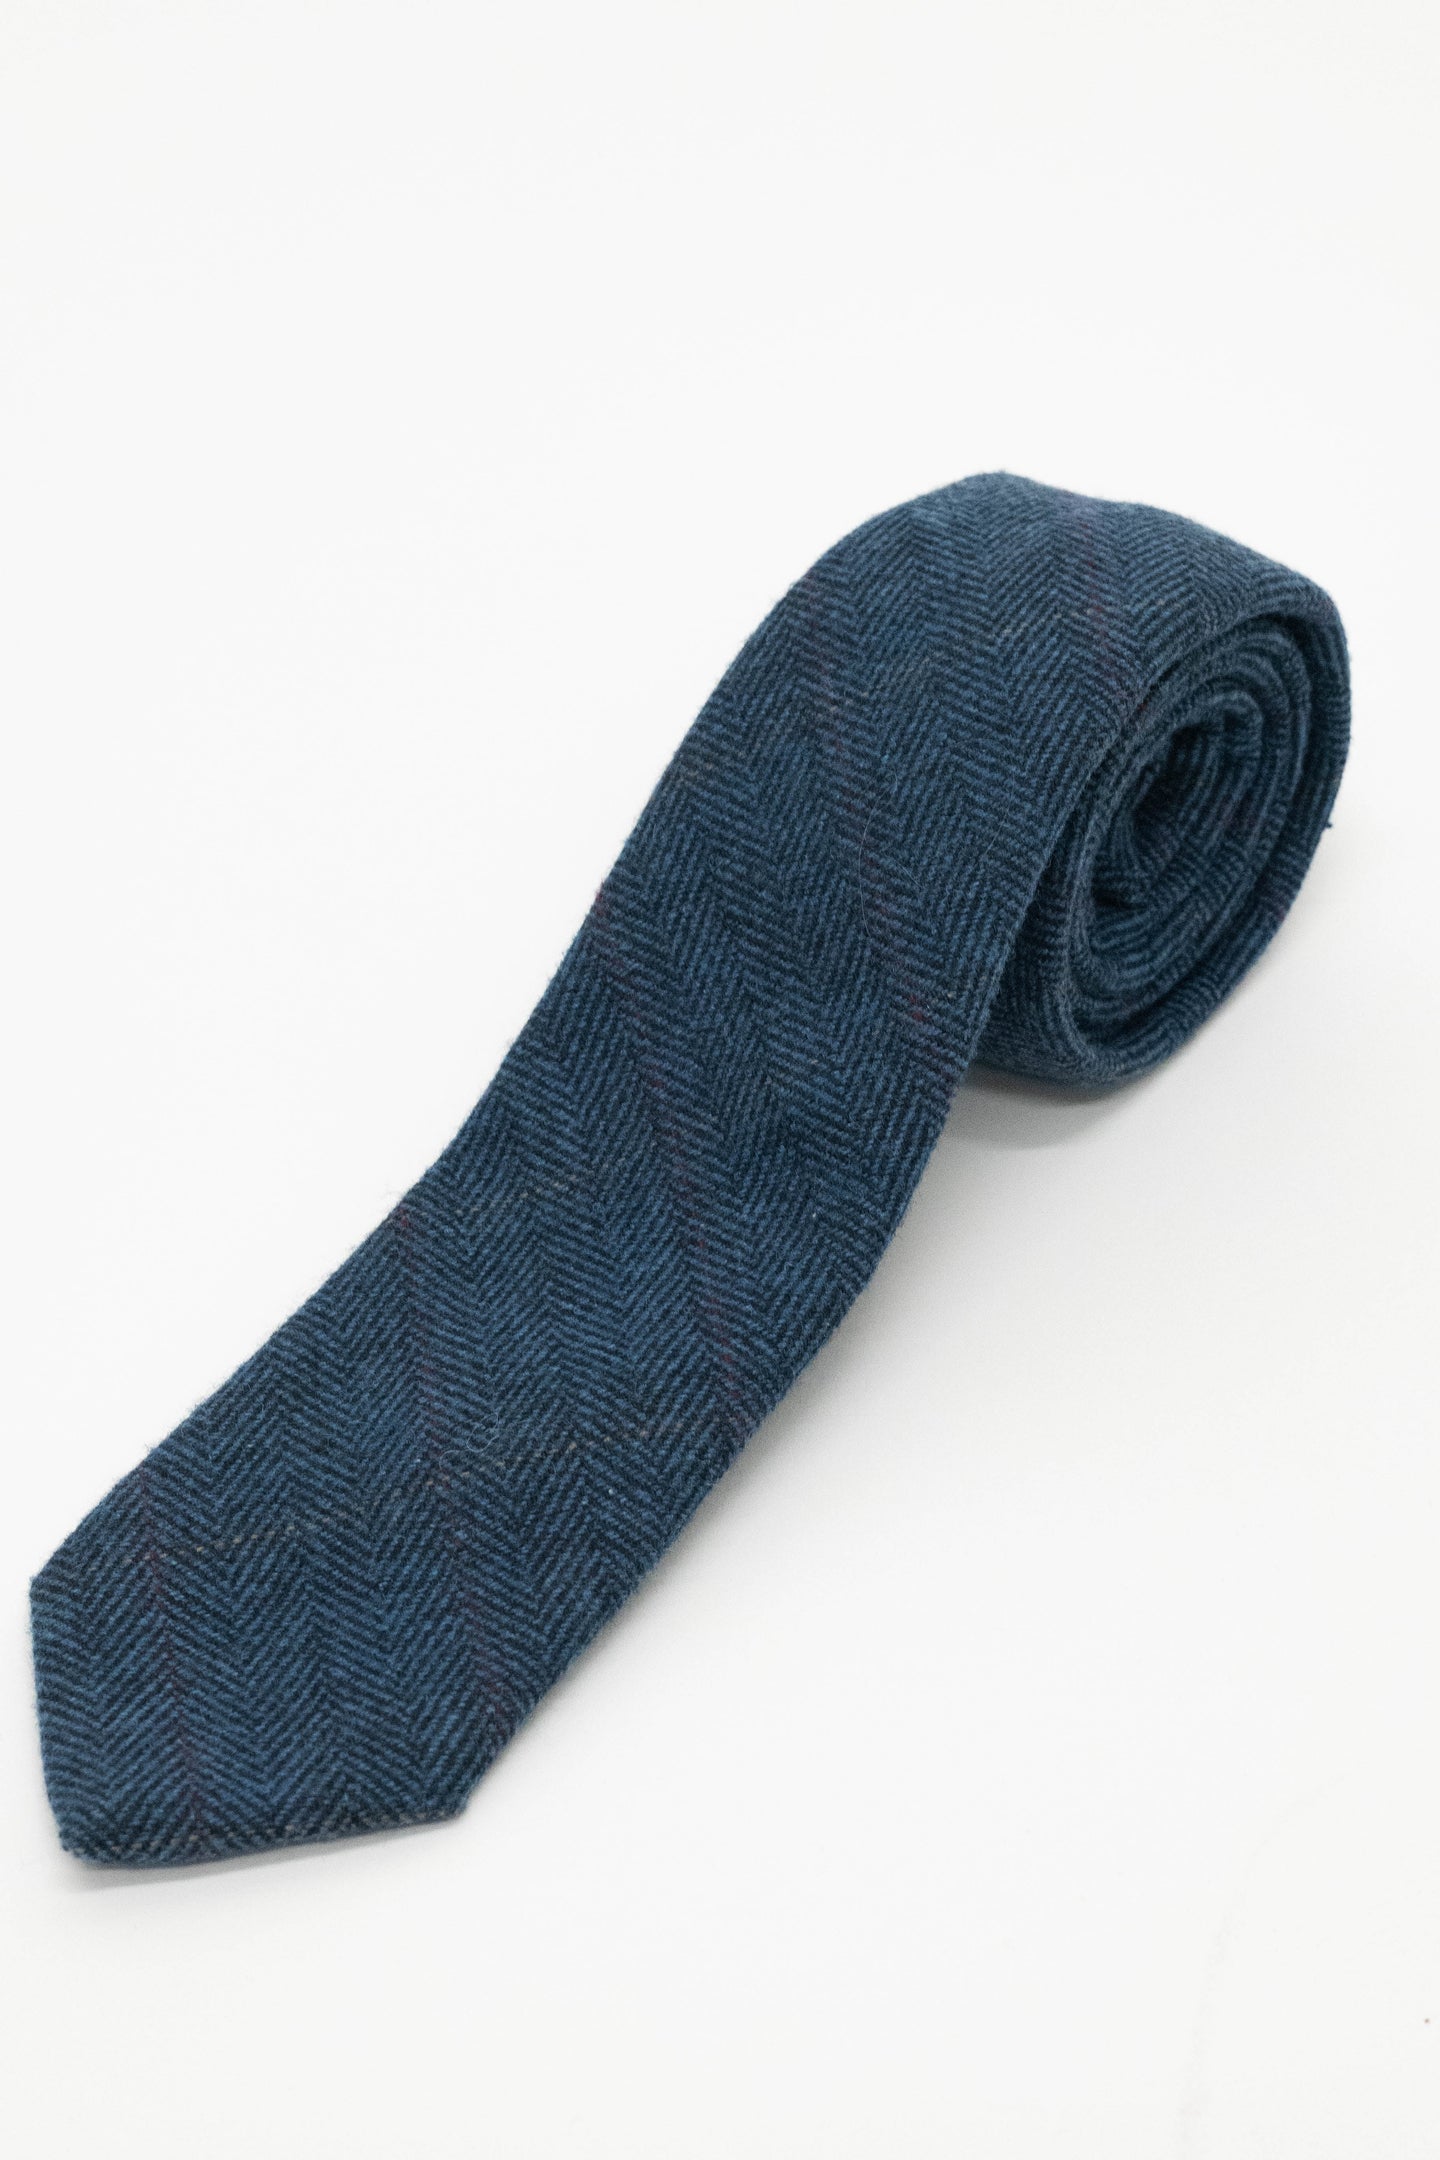 Marc Darcy Dion Blue Tweed Style Tie